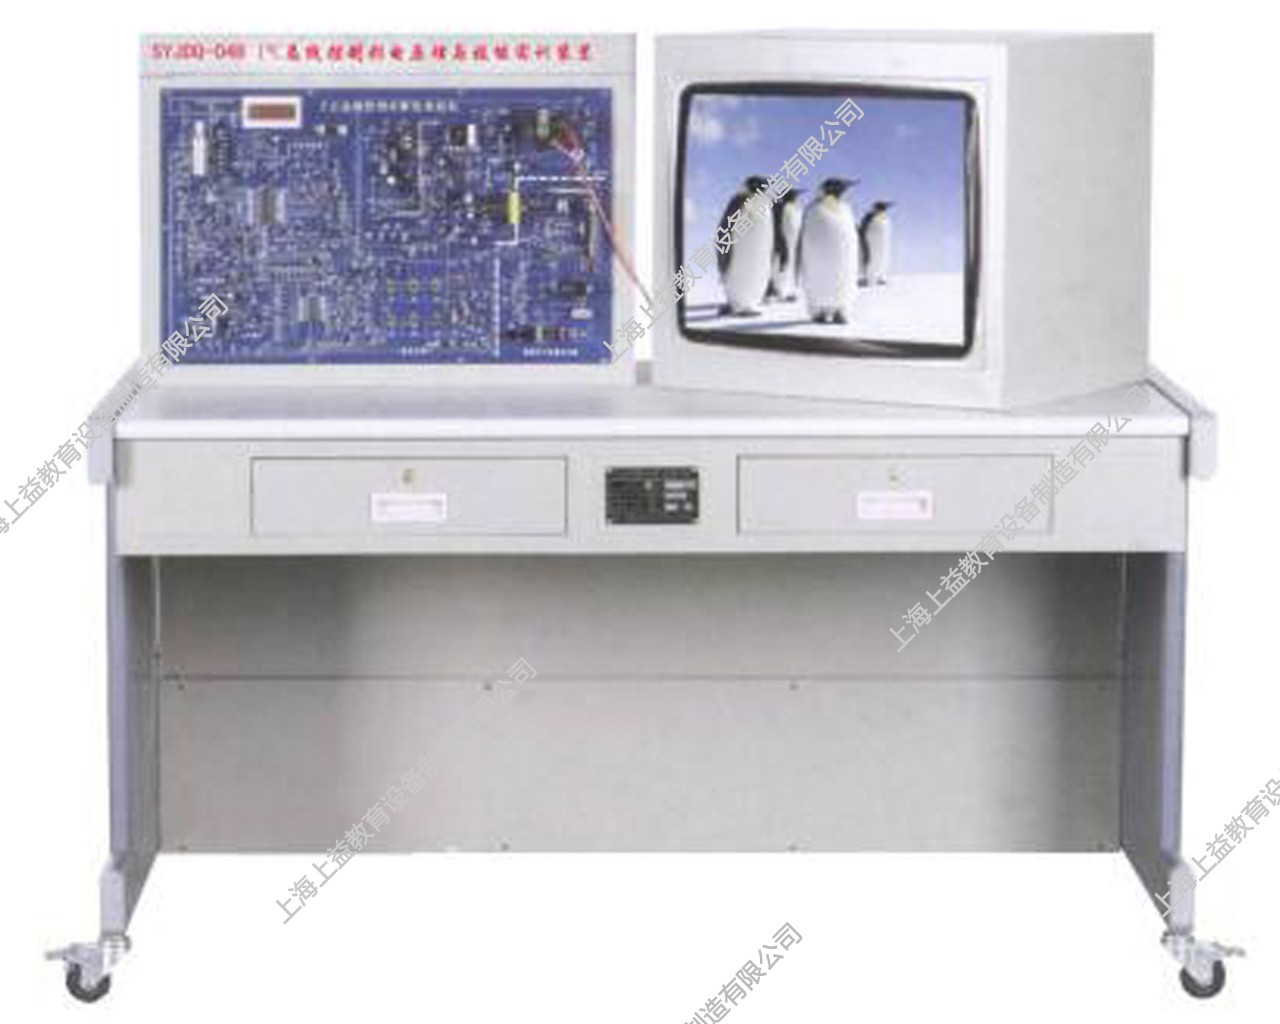 SYJDQ-04B	I2C總線控制彩電原理與技能實訓裝置